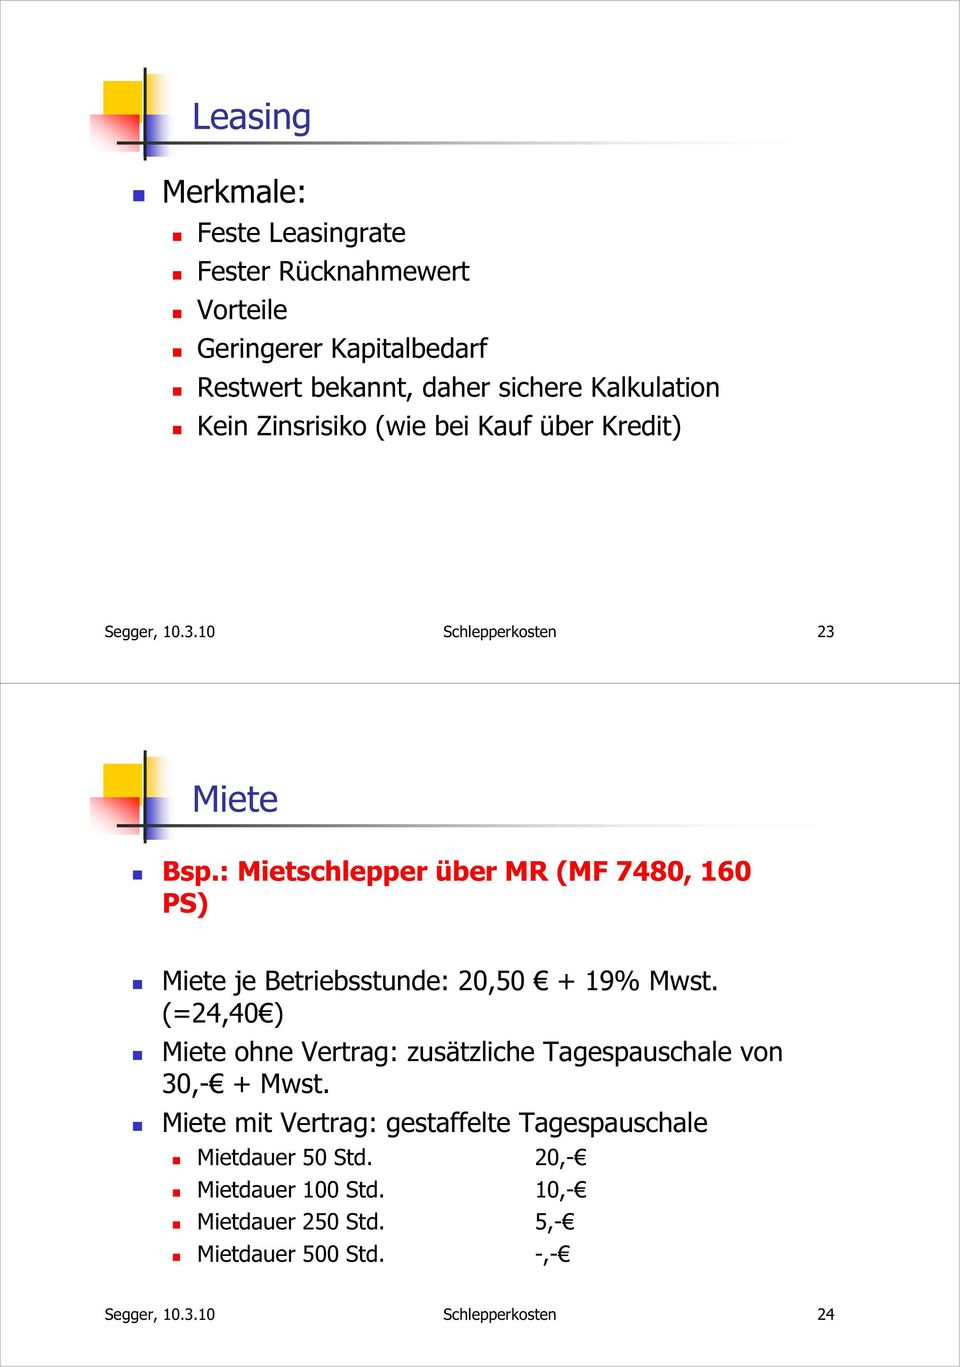 : Mietschlepper über MR (MF 7480, 160 PS) Miete je Betriebsstunde: 20,50 + 19% Mwst.